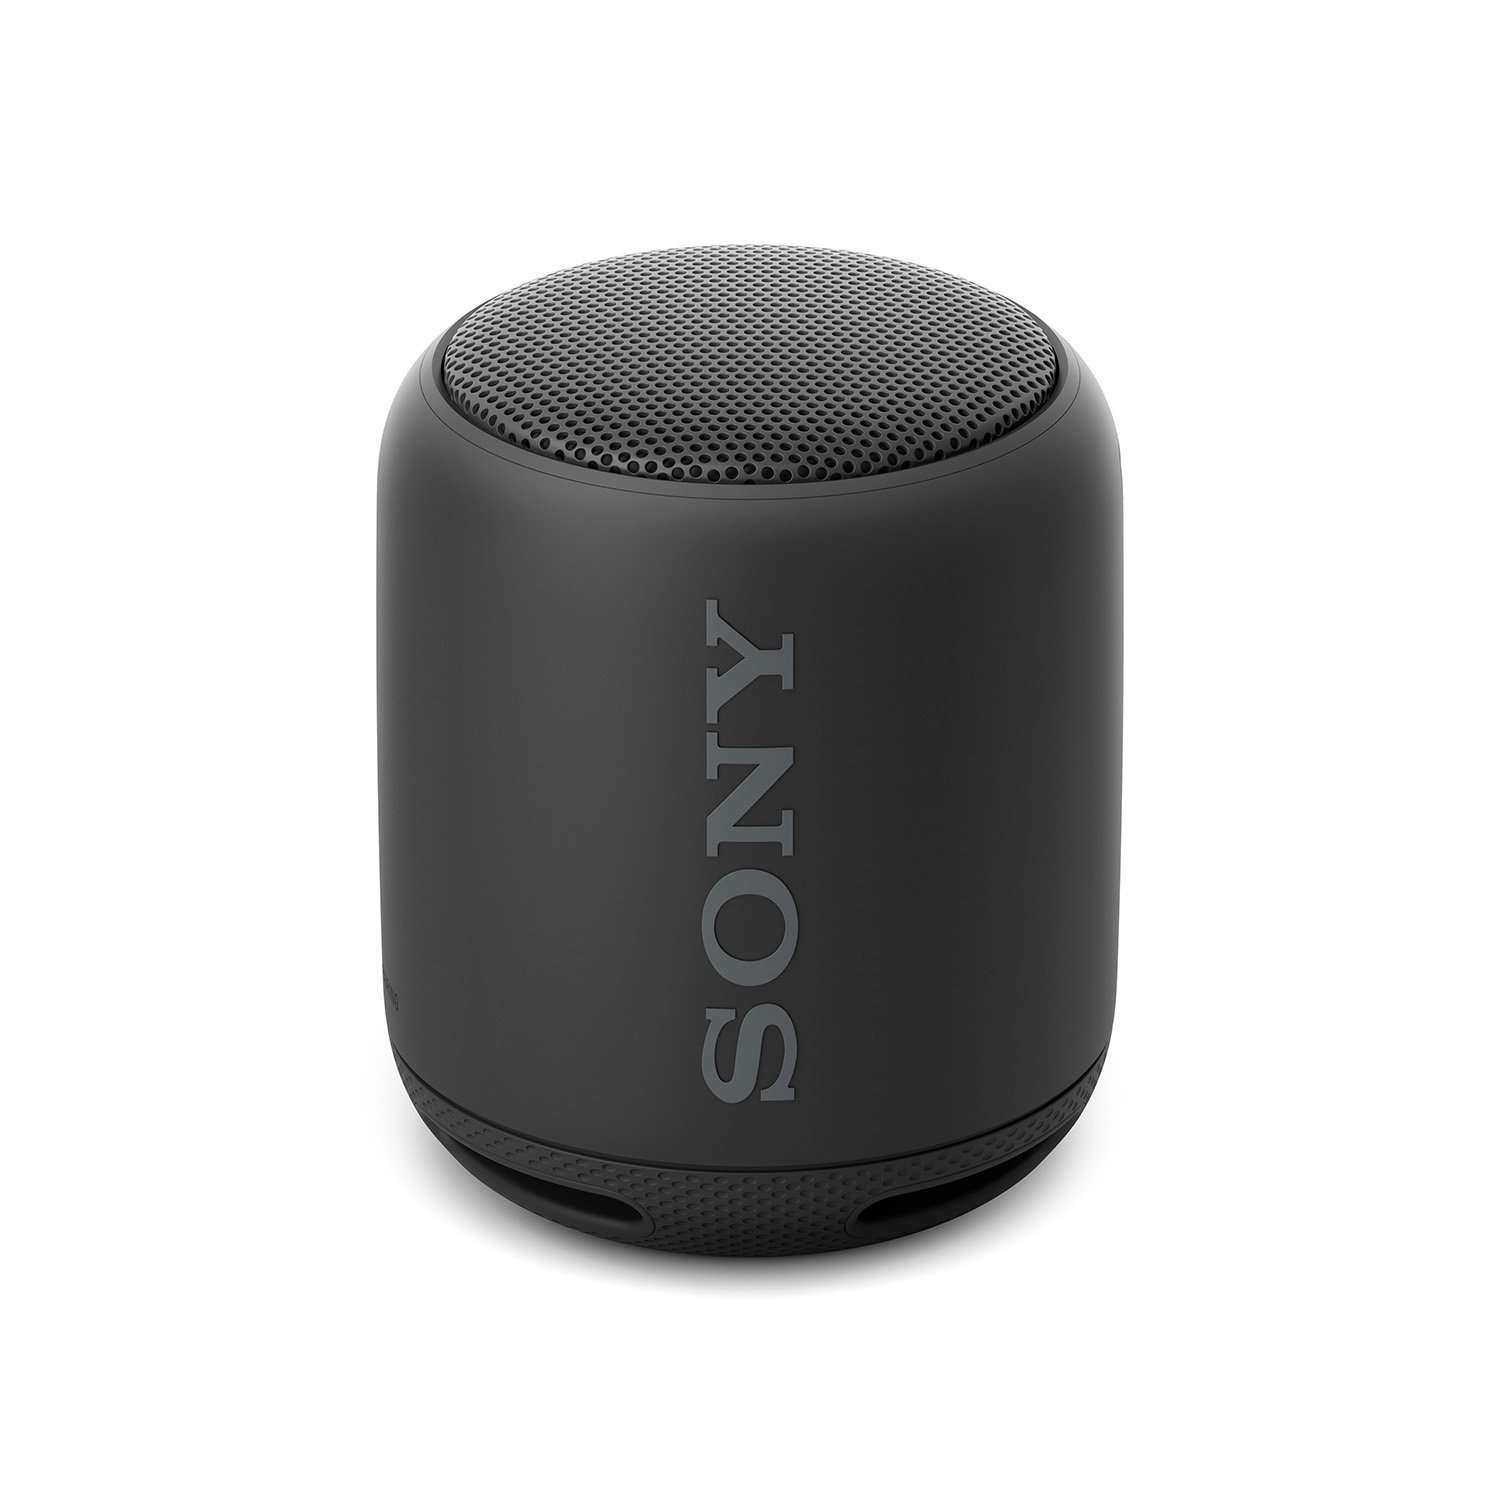 Sony Srs Xb10 Extra Bass Portable Bluetooth Speaker Photos Image